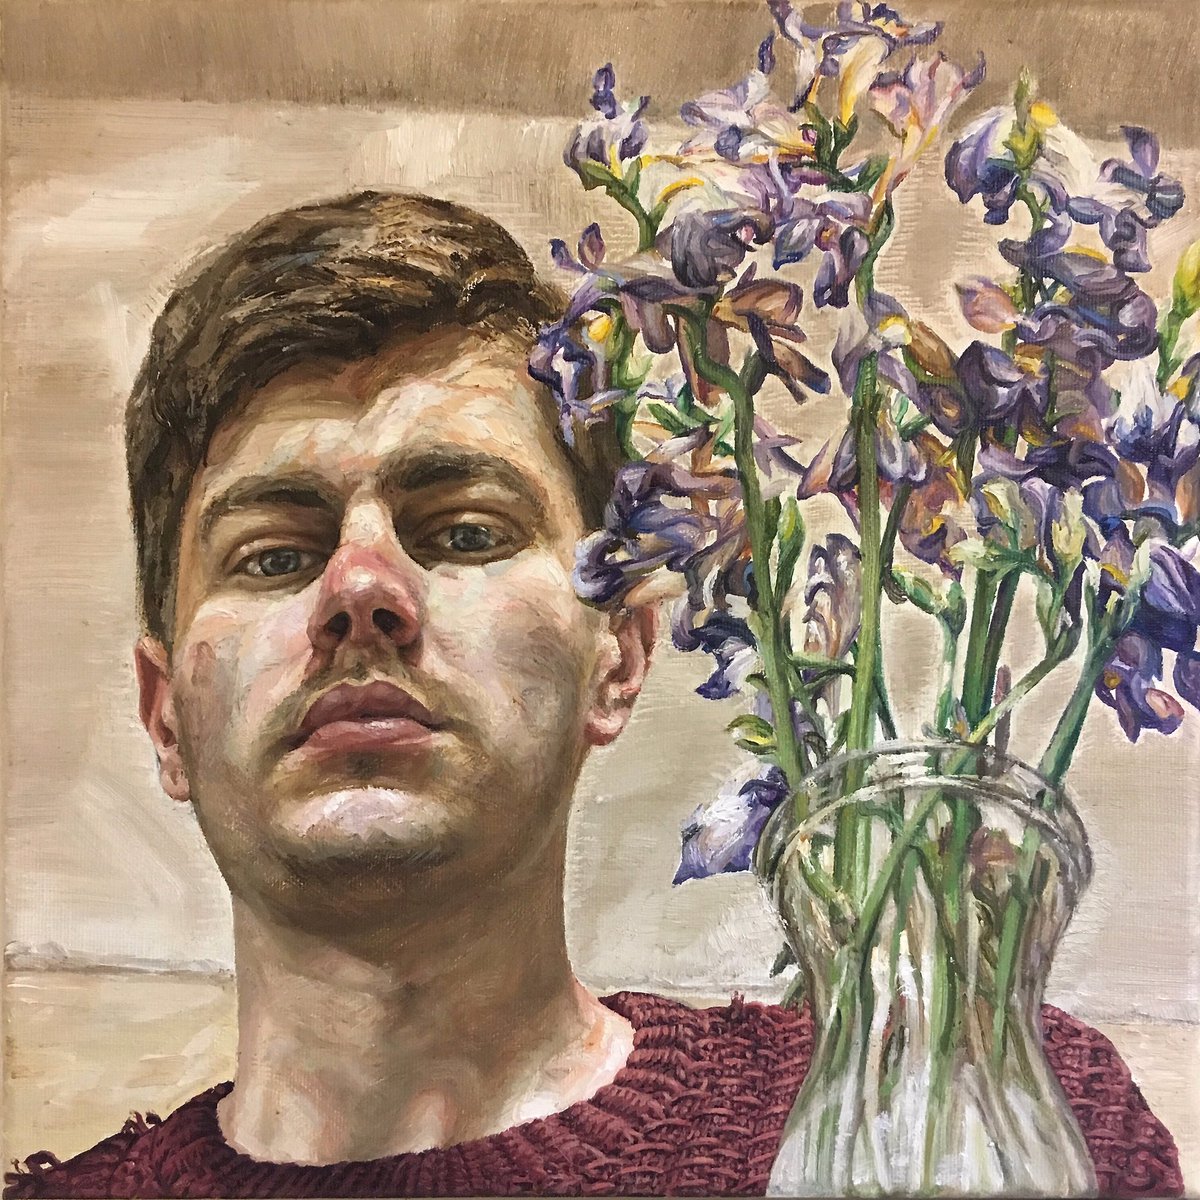 ‘Self-Portrait with Dead Flowers’, 2020. Oil-on/canvas, 30x30cm. #art #selfportrait #flowers #lifepainting #oilpainting